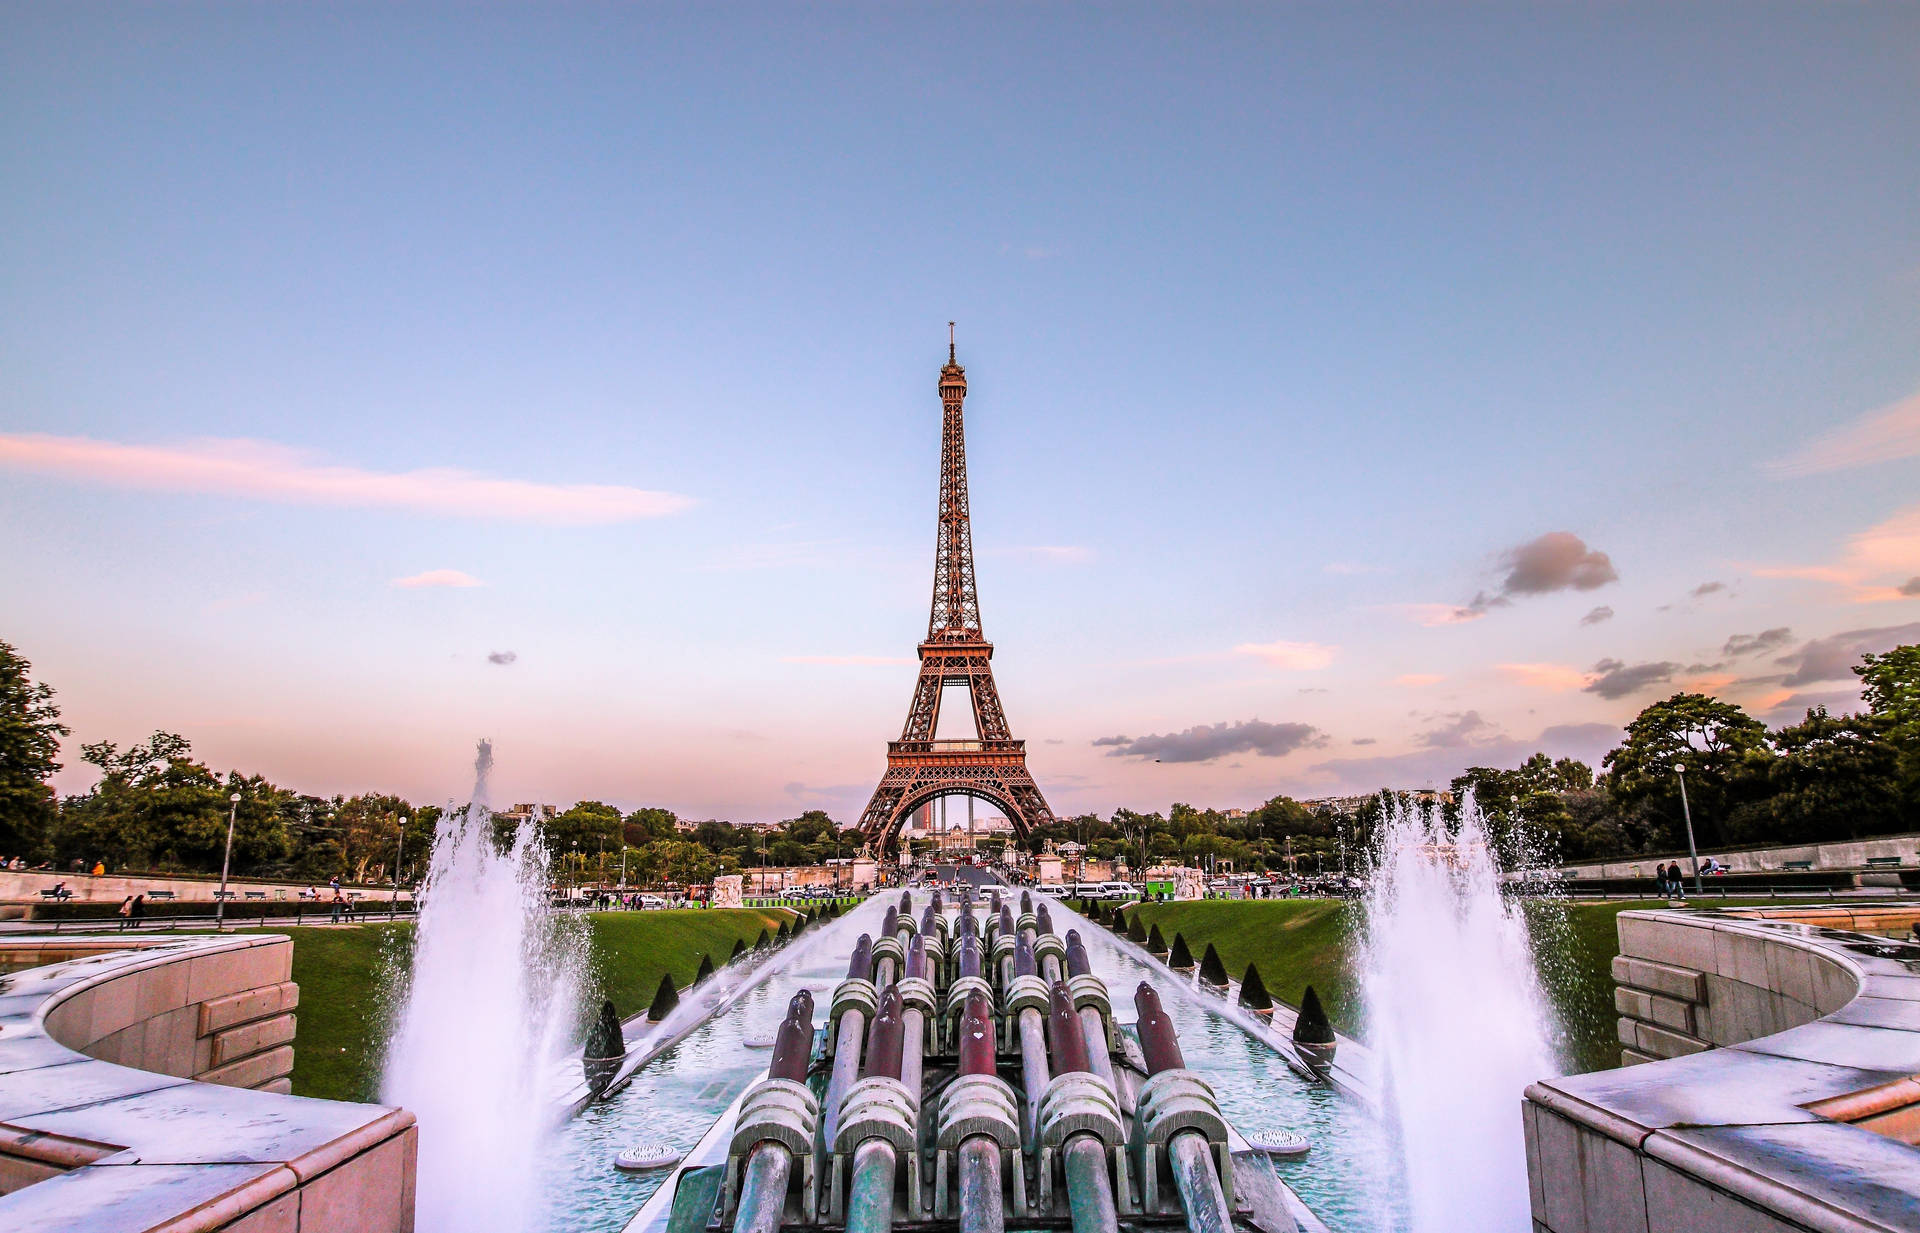 Paris Fountain Of Warsaw Trocadéro Gardens